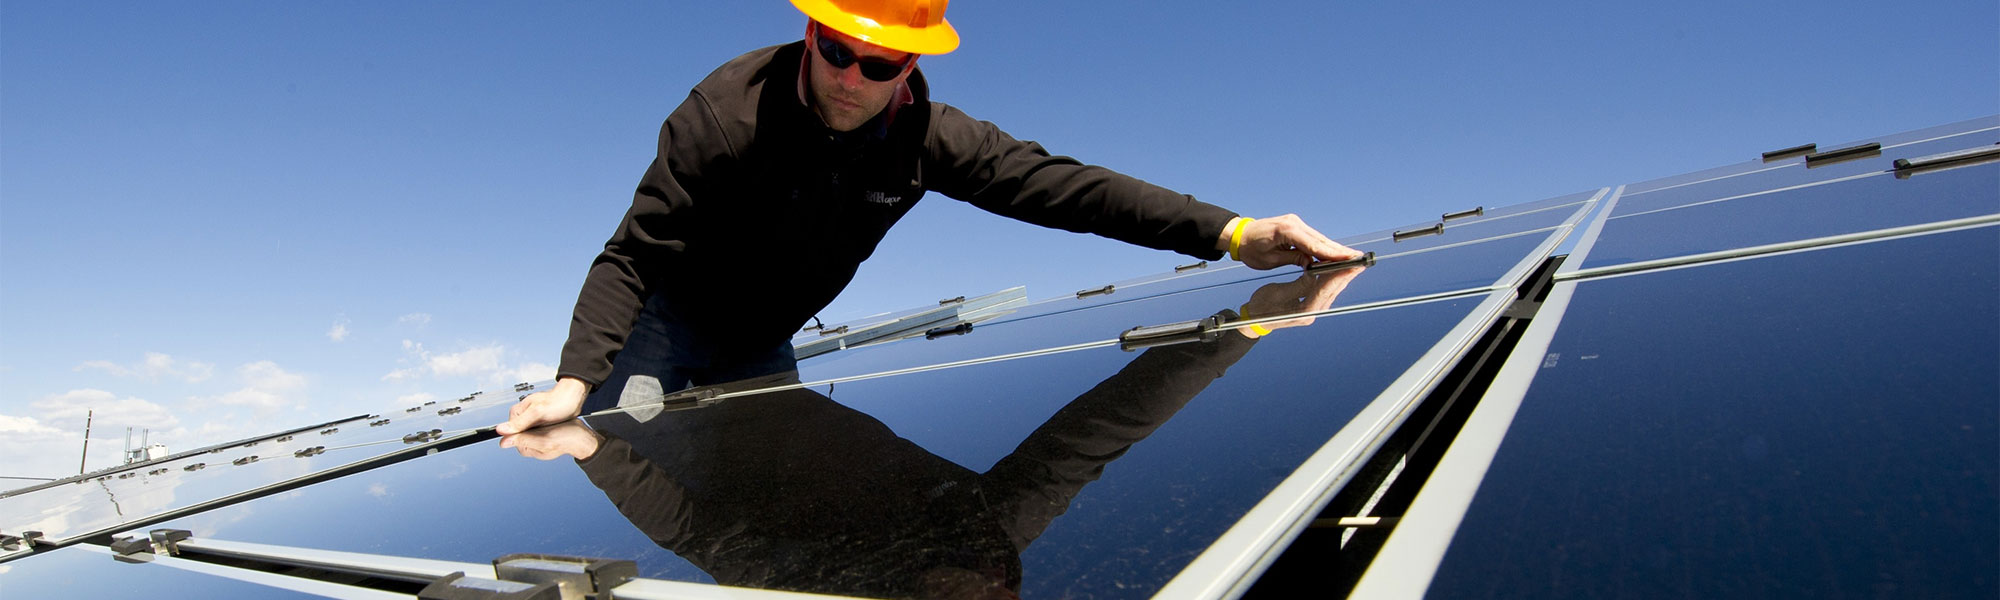 glean-free-solar-quote-man-installing-panels